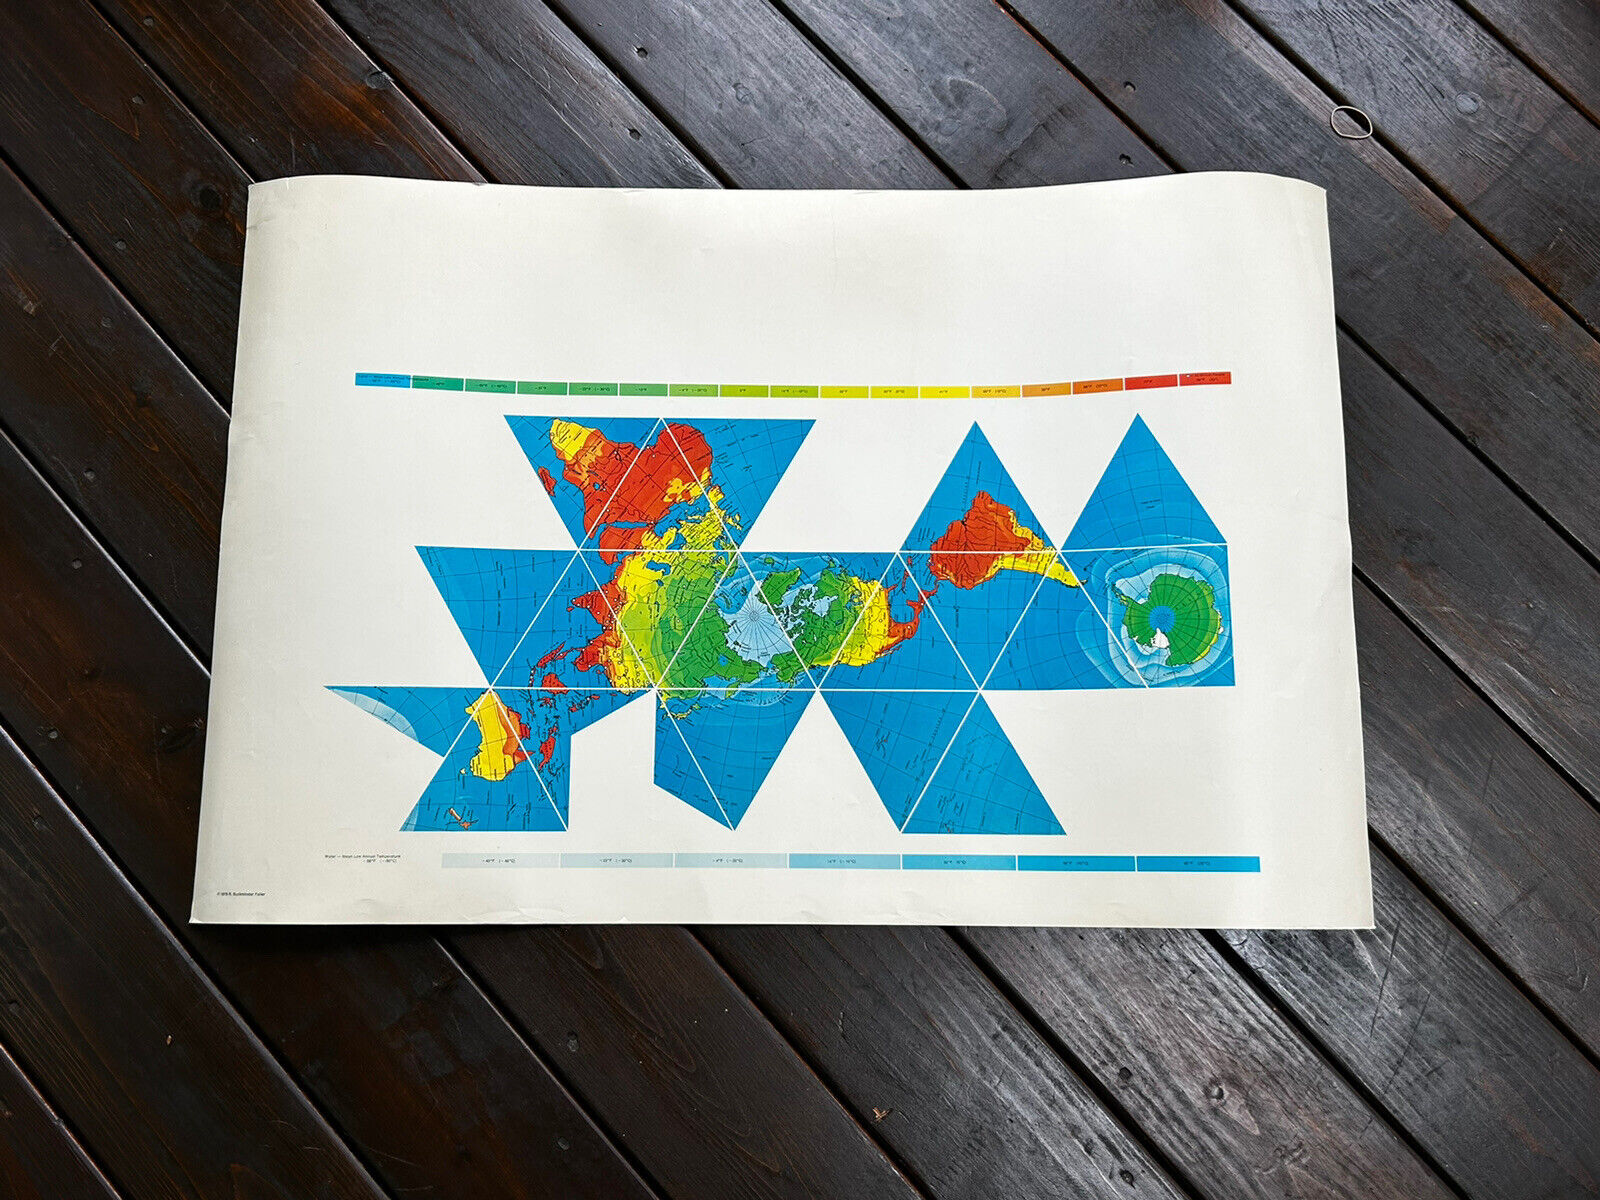 R. Buckminster Fuller Dymaxion World Map 1979 34”x23” Color Print